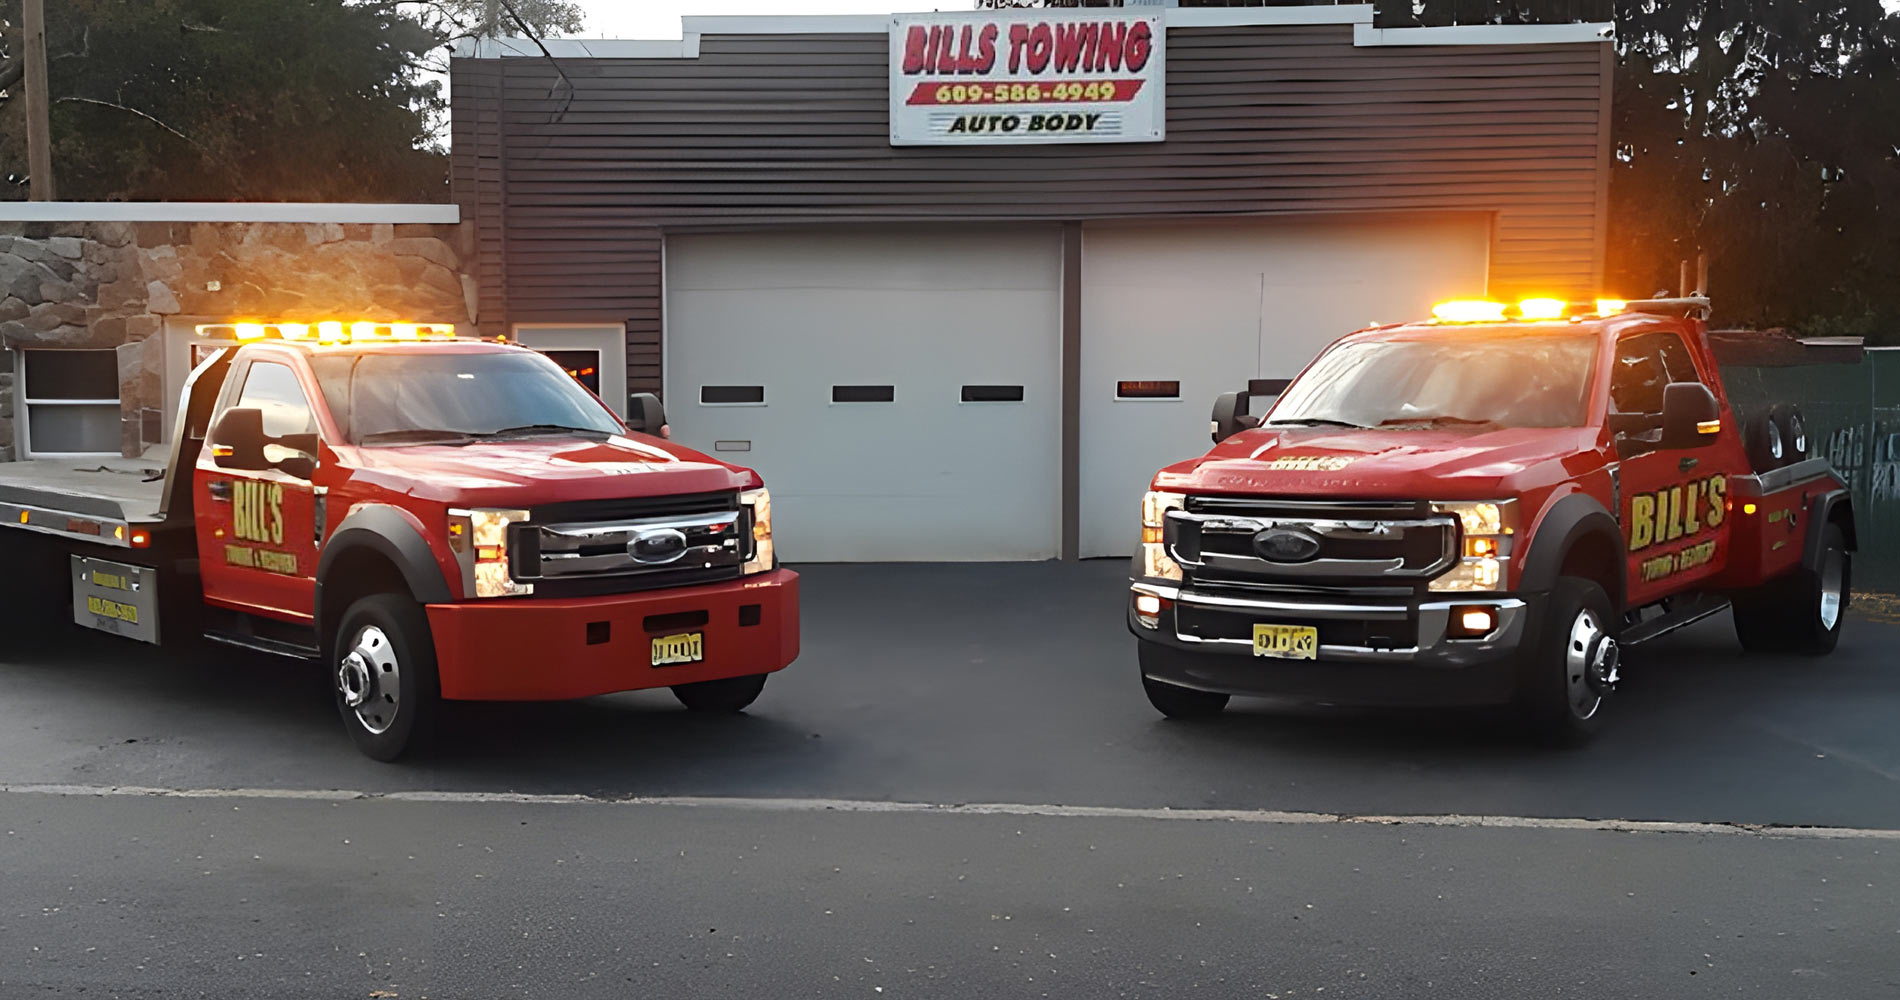 Bill's Towing | Mercerville, NJ 08619